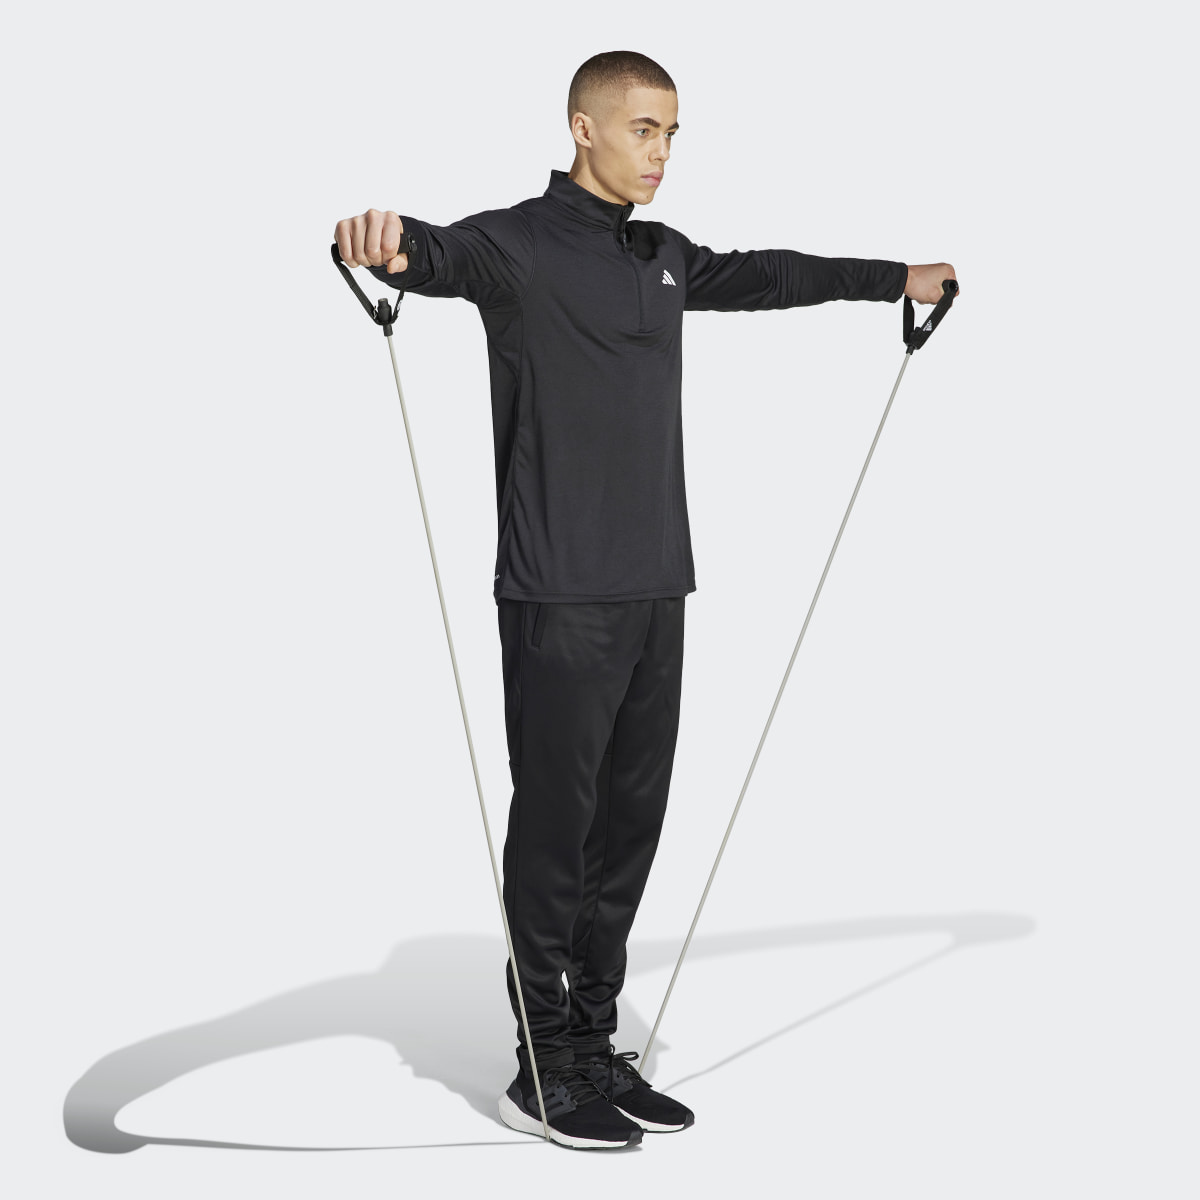 Adidas Train Essentials Seasonal Training 1/4-Zip Long Sleeve Sweatshirt. 5